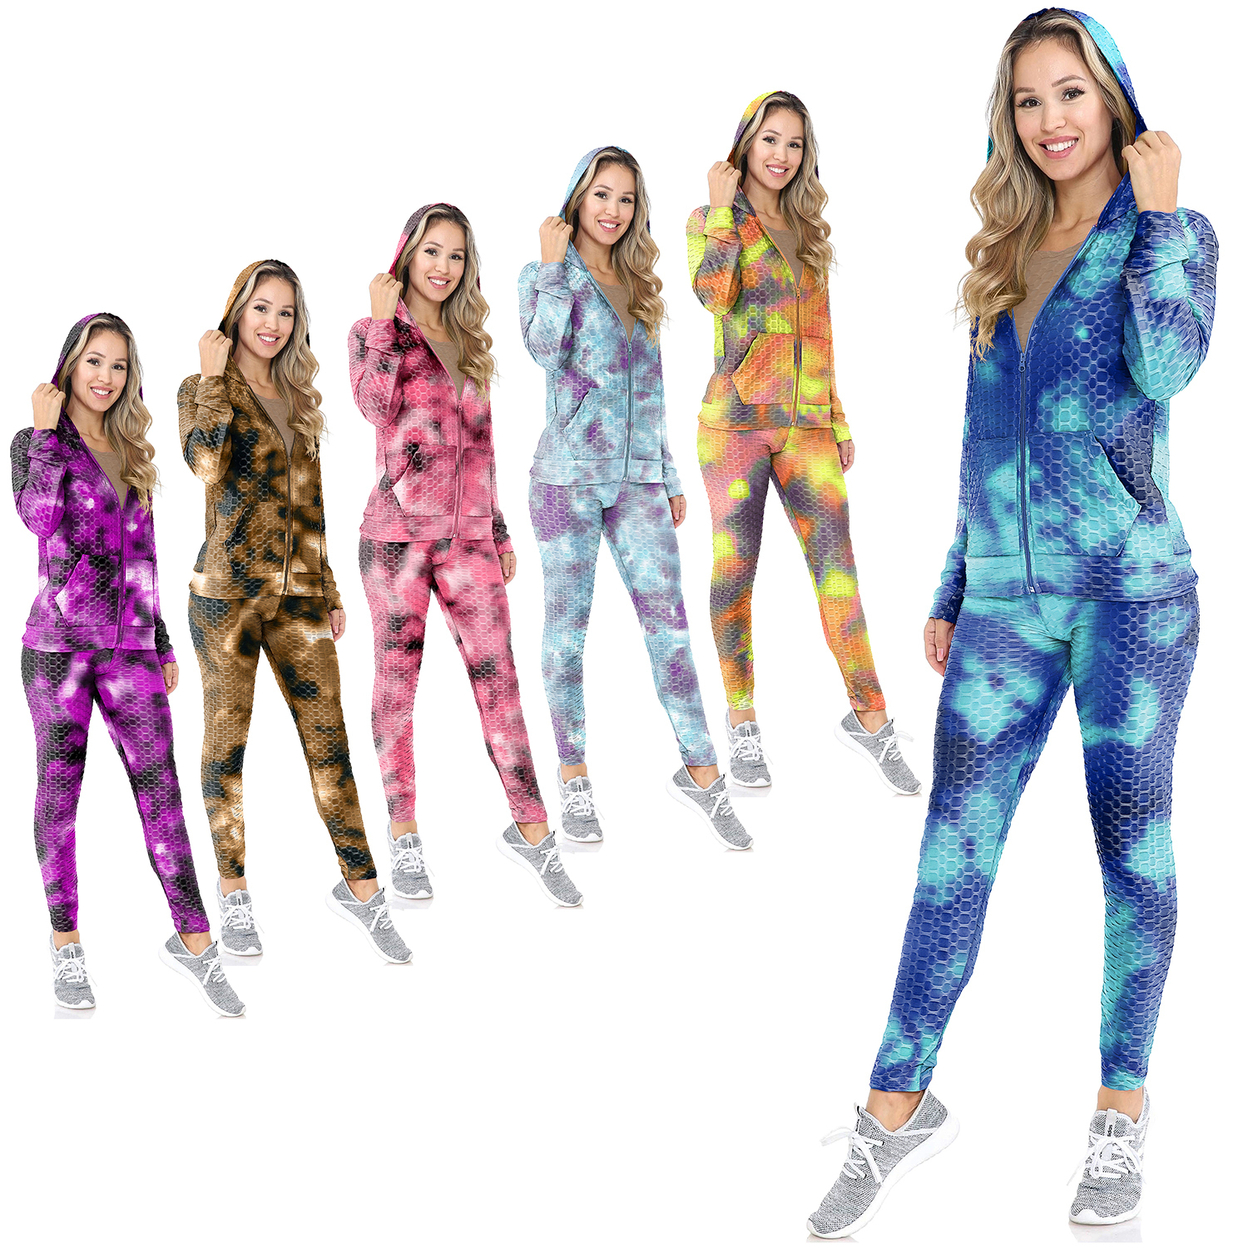 2-Set: Women's Athletic Anti-Cellulite Textured Tie Dye Body Contour Yoga Track Suit W/ Hood - Medium, Solid